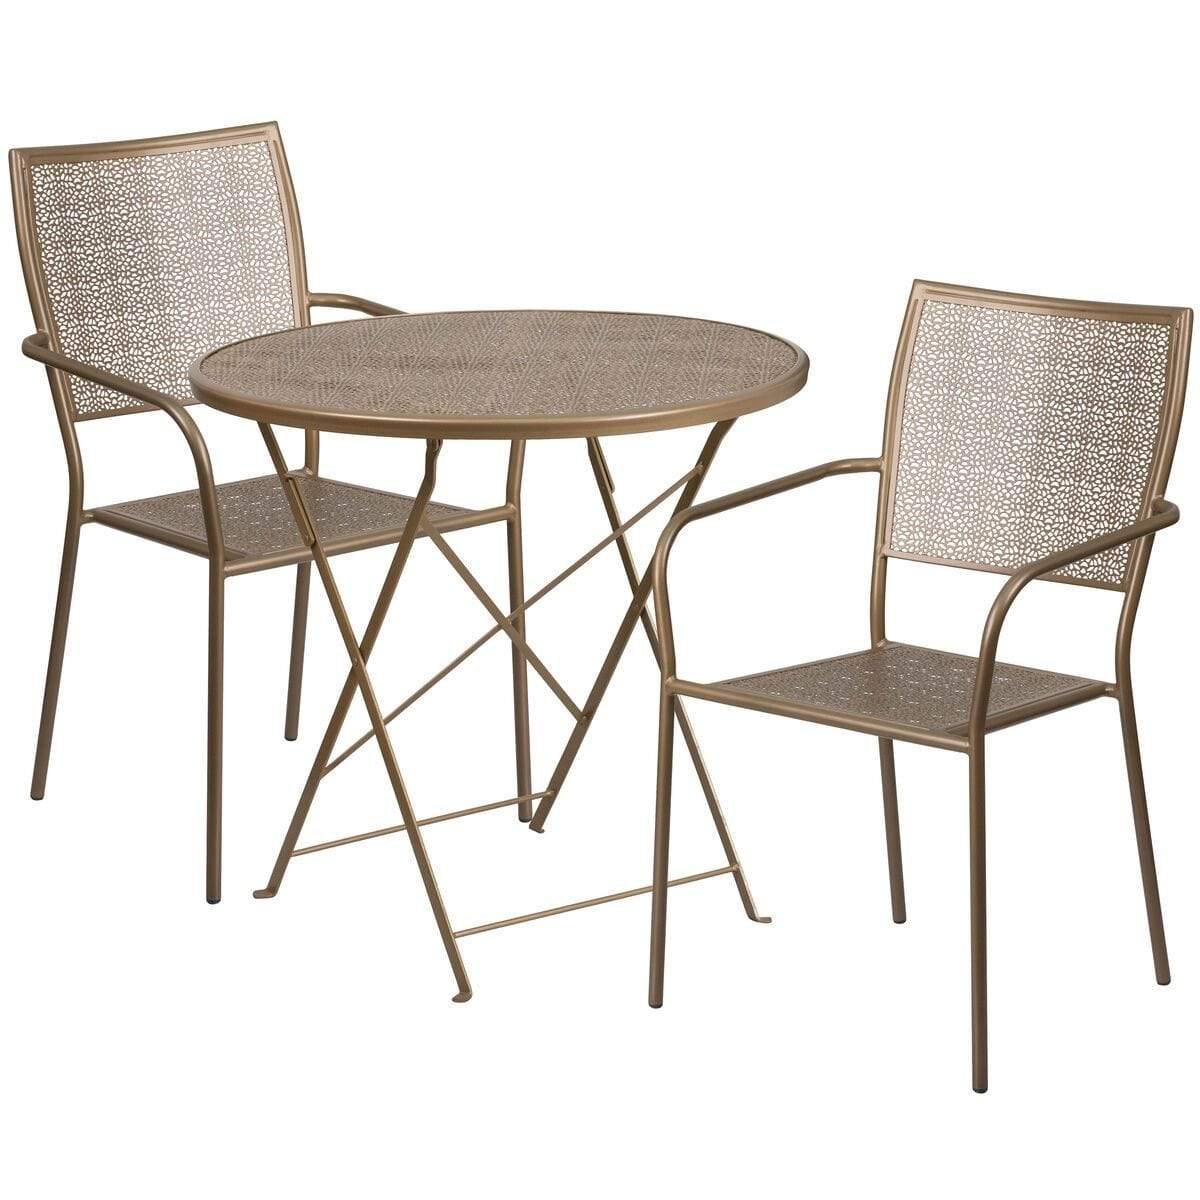 Samuel Norman & Assoc. Furnishings Metal Patio Table and Chair Sets Samuel Norman & Assoc. Furnishings 30RD Gold Fold Patio Set